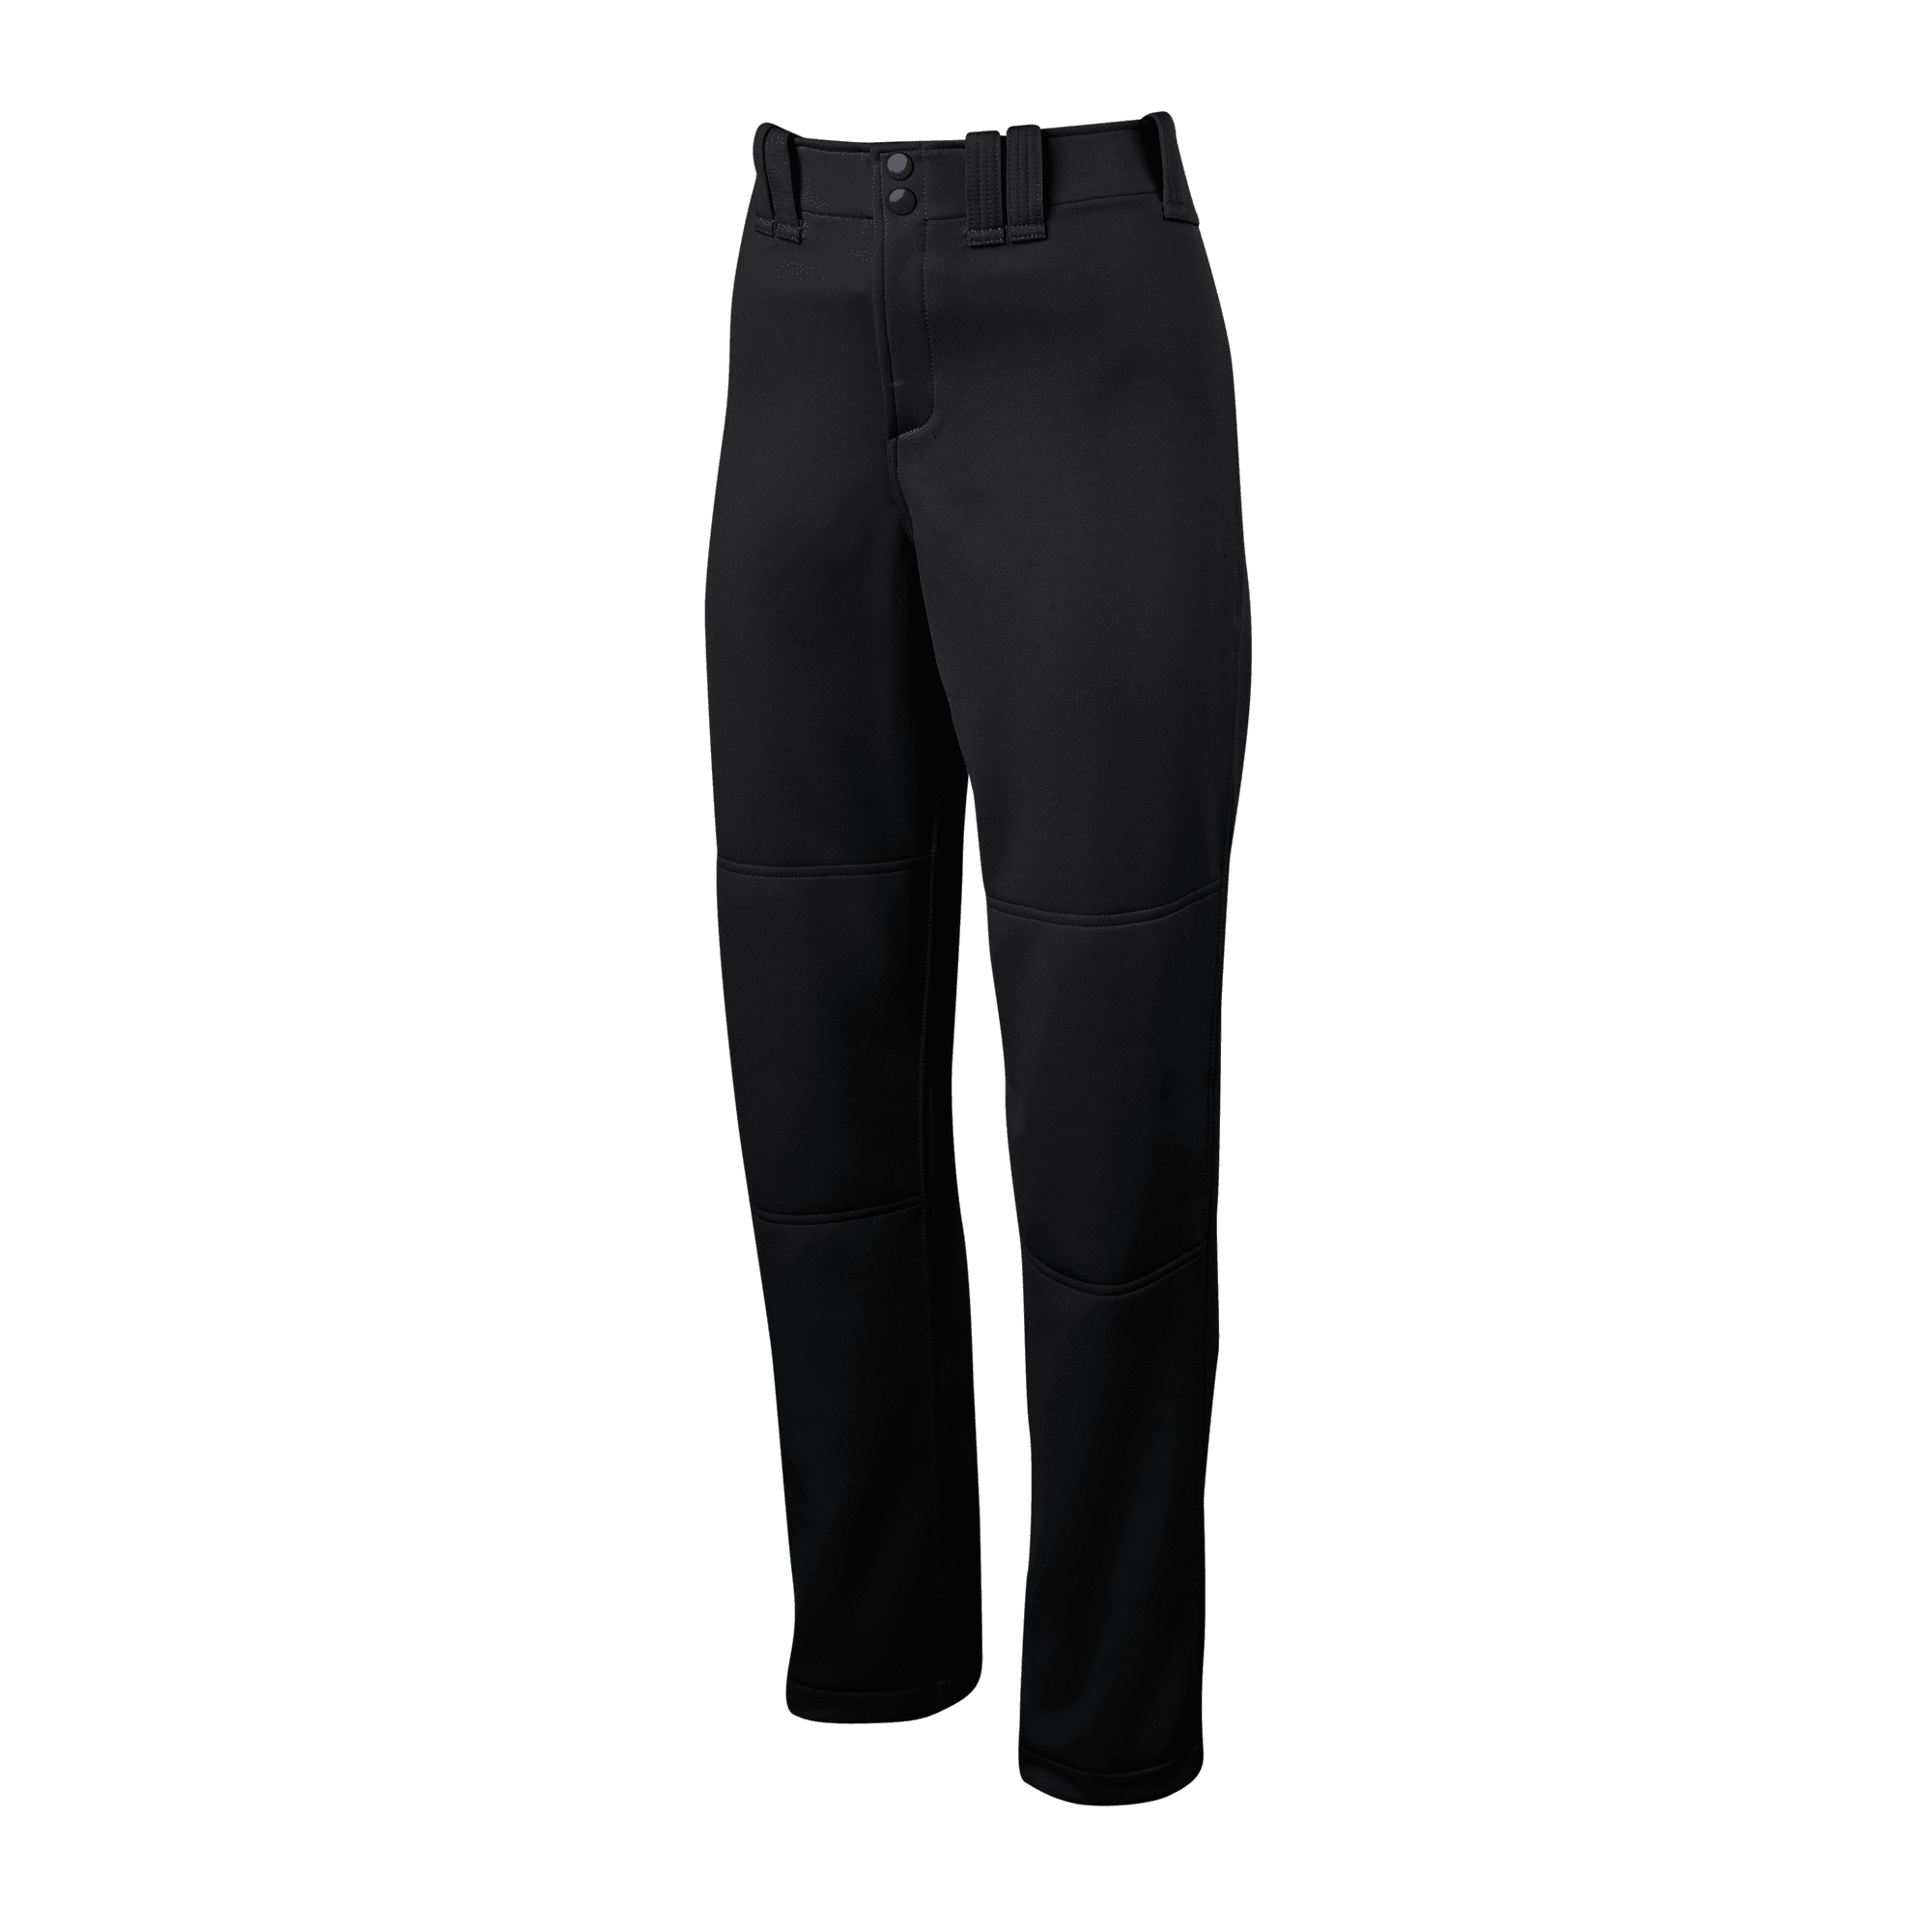 Mizuno Softball Pants Girls Youth Belted Padded Pants Black or Gray 